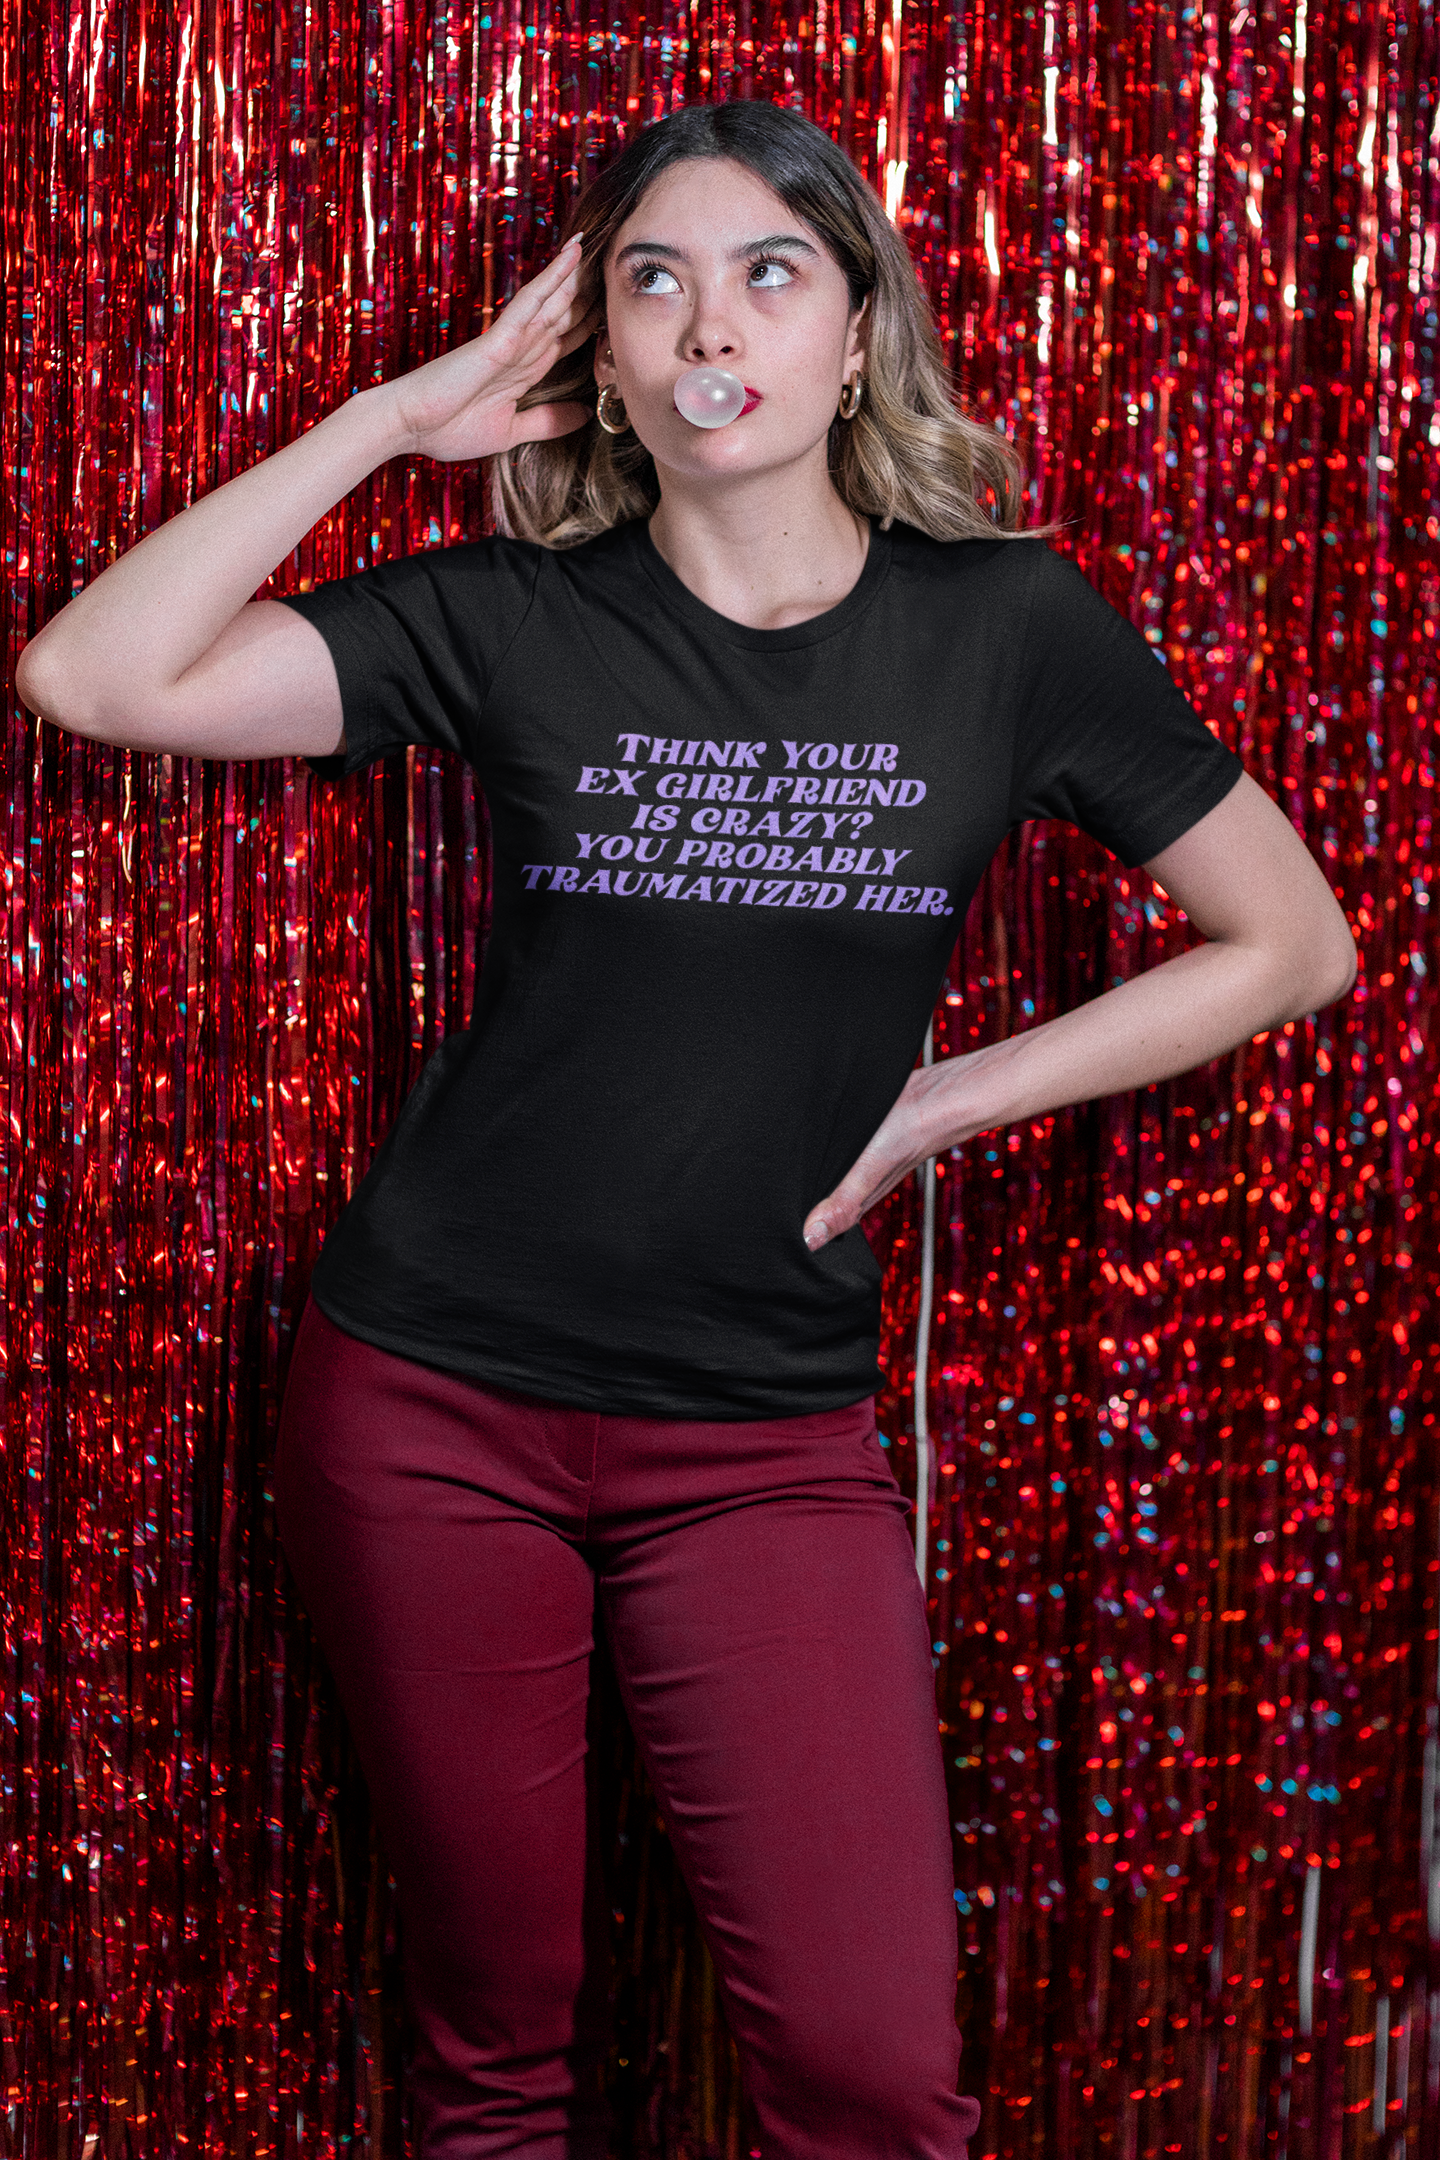 Think Your Ex Is “Crazy” Short-Sleeve Unisex Feminist T-Shirt - Shop Women’s Rights T-shirts - Feminist Trash Store - Black Oversized Women’s Shirt